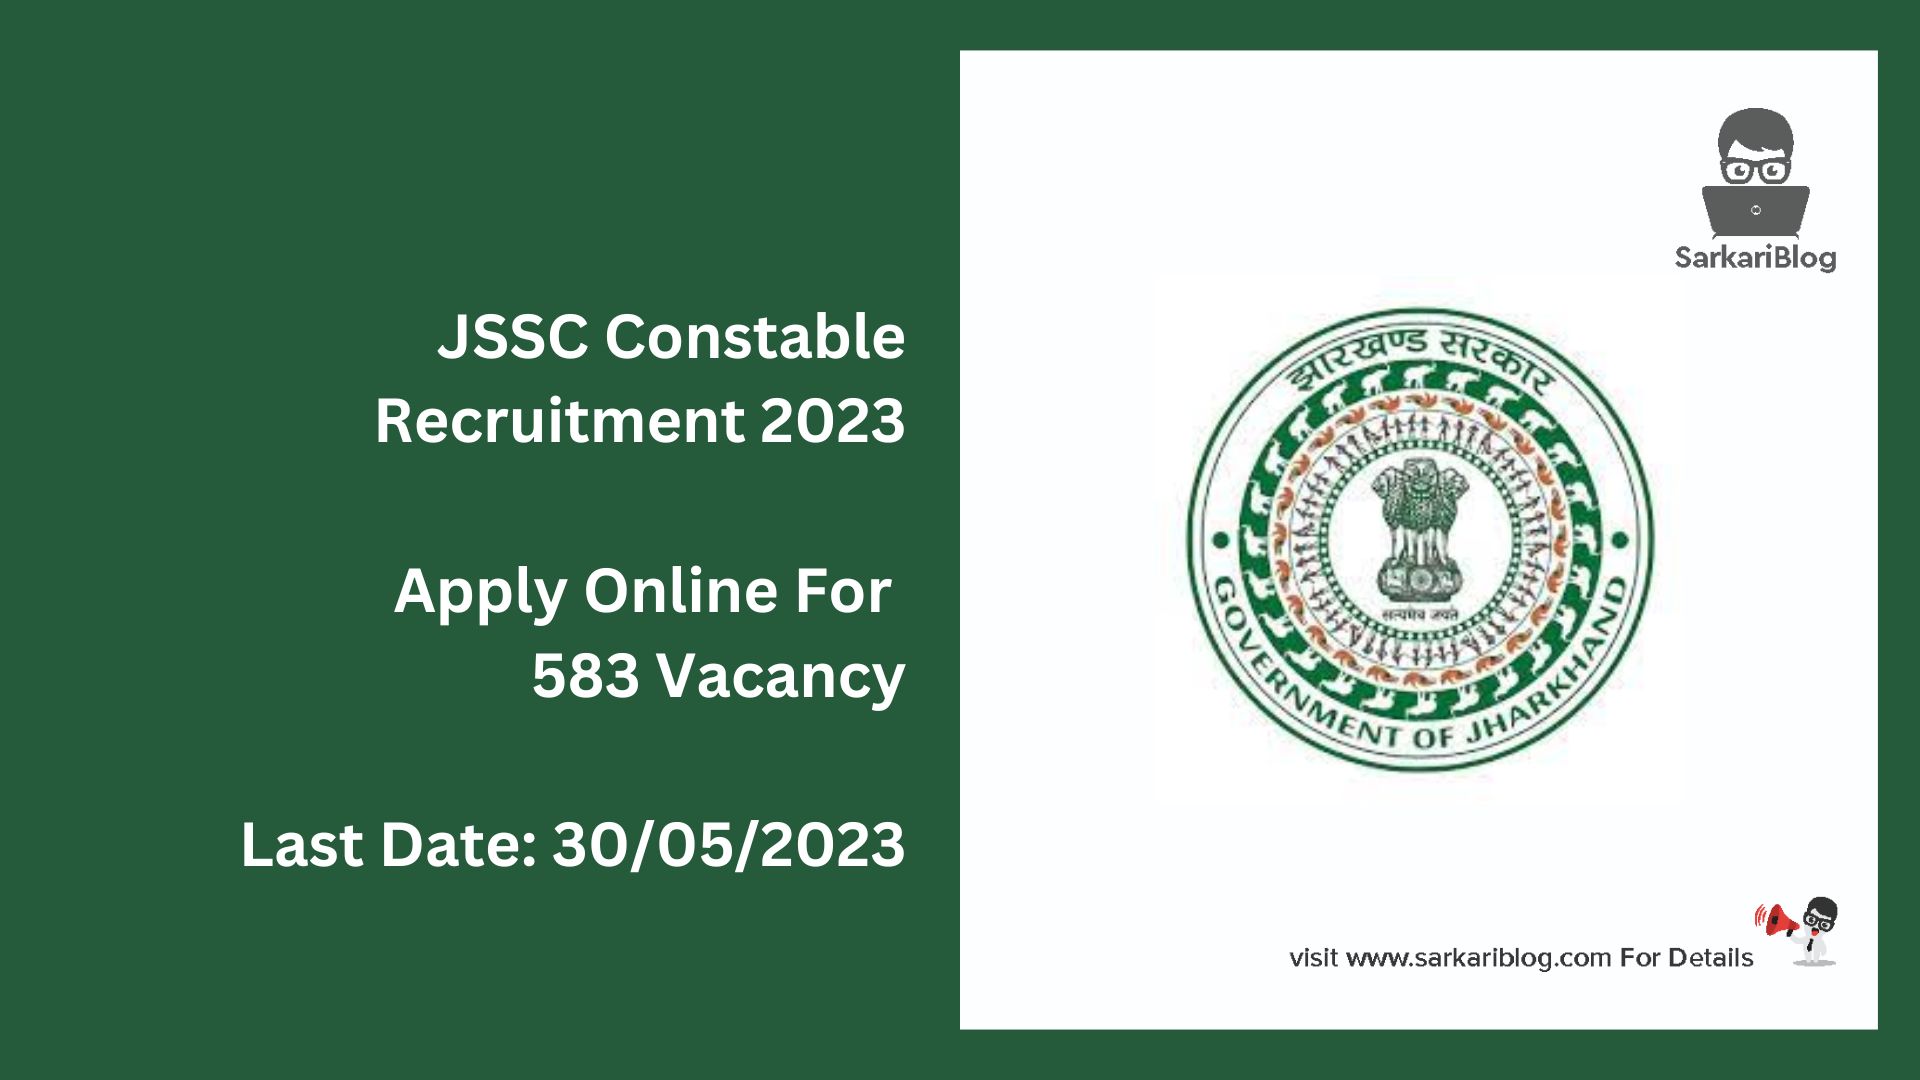 JSSC Constable Recruitment 2023 1 | JSSC Constable Recruitment 2023 | Apply Online For 583 Vacancy |